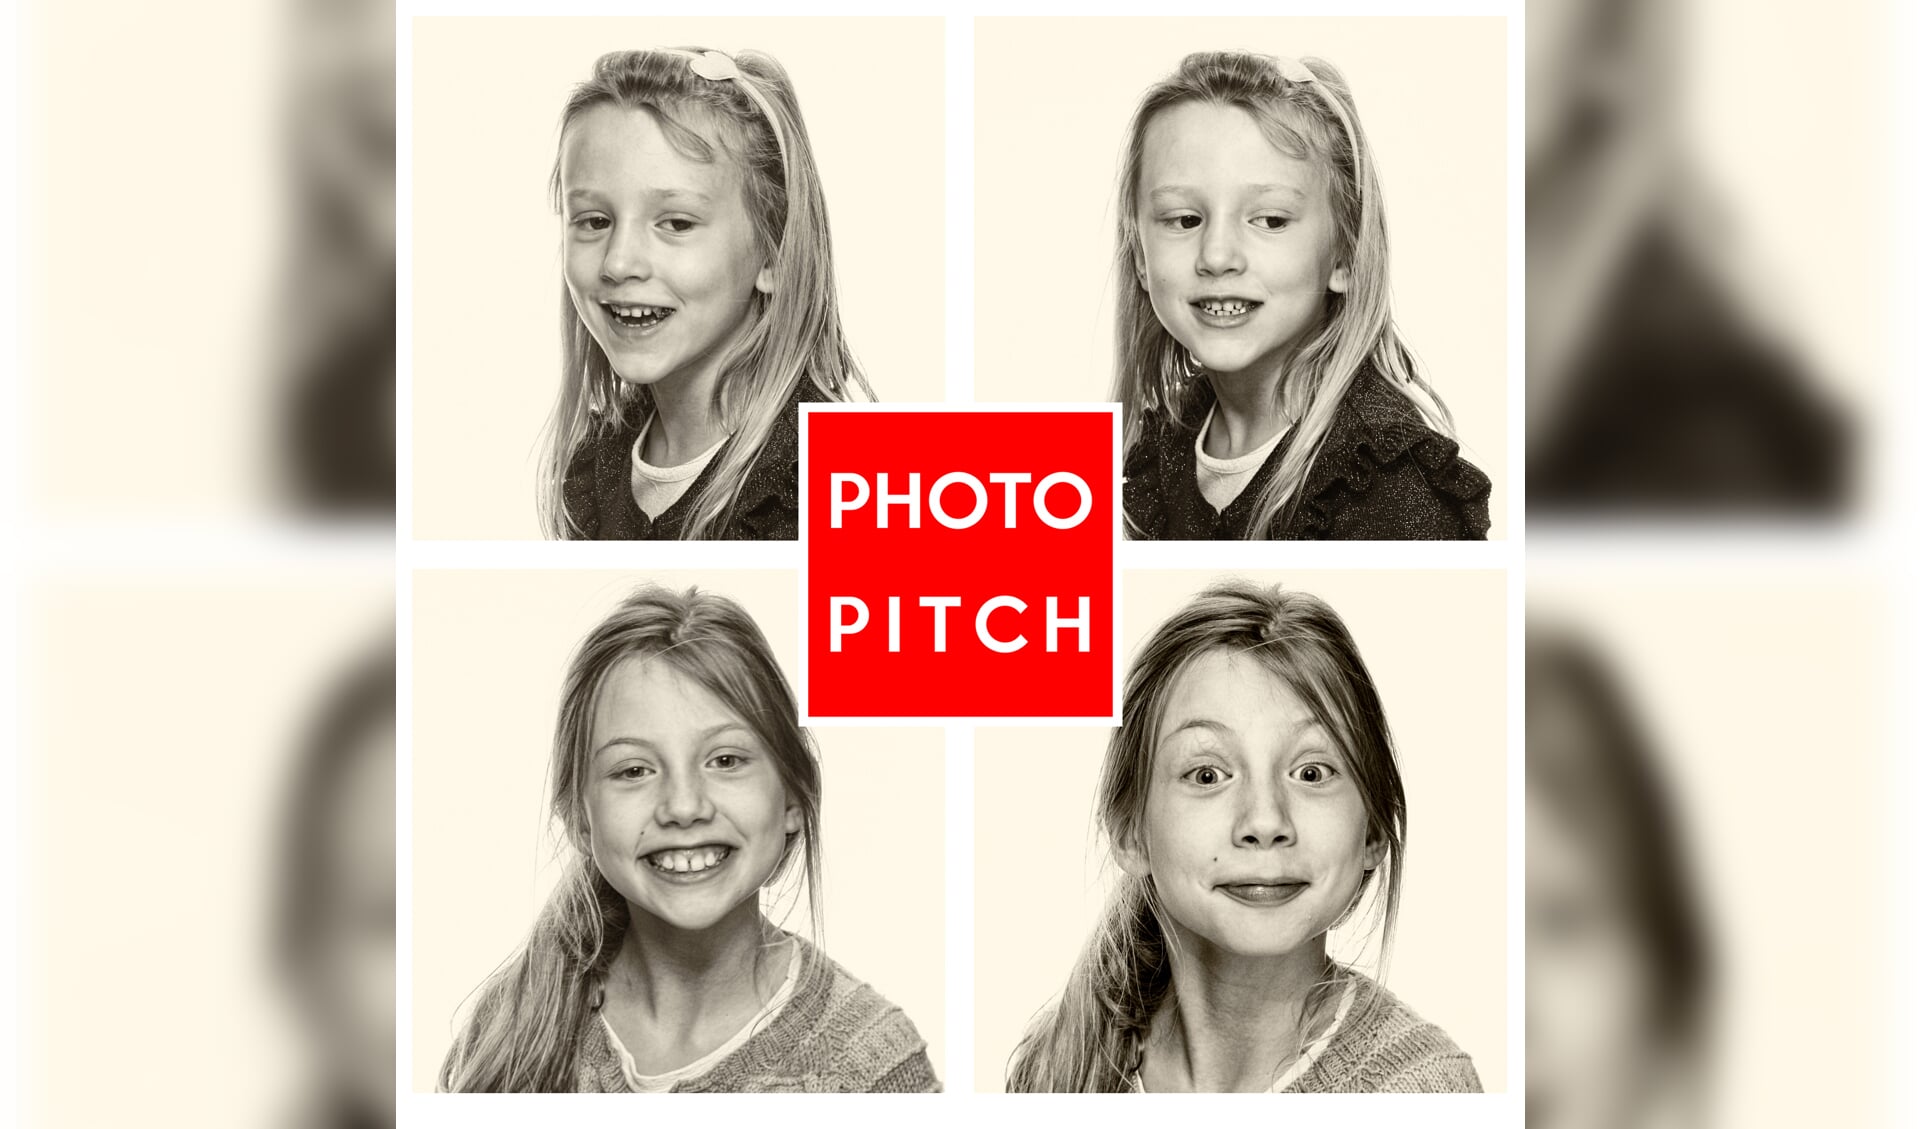 Kwaliteitsfoto's laat je printen bij Fotostudio Photopitch. (Foto: Fotopitch)